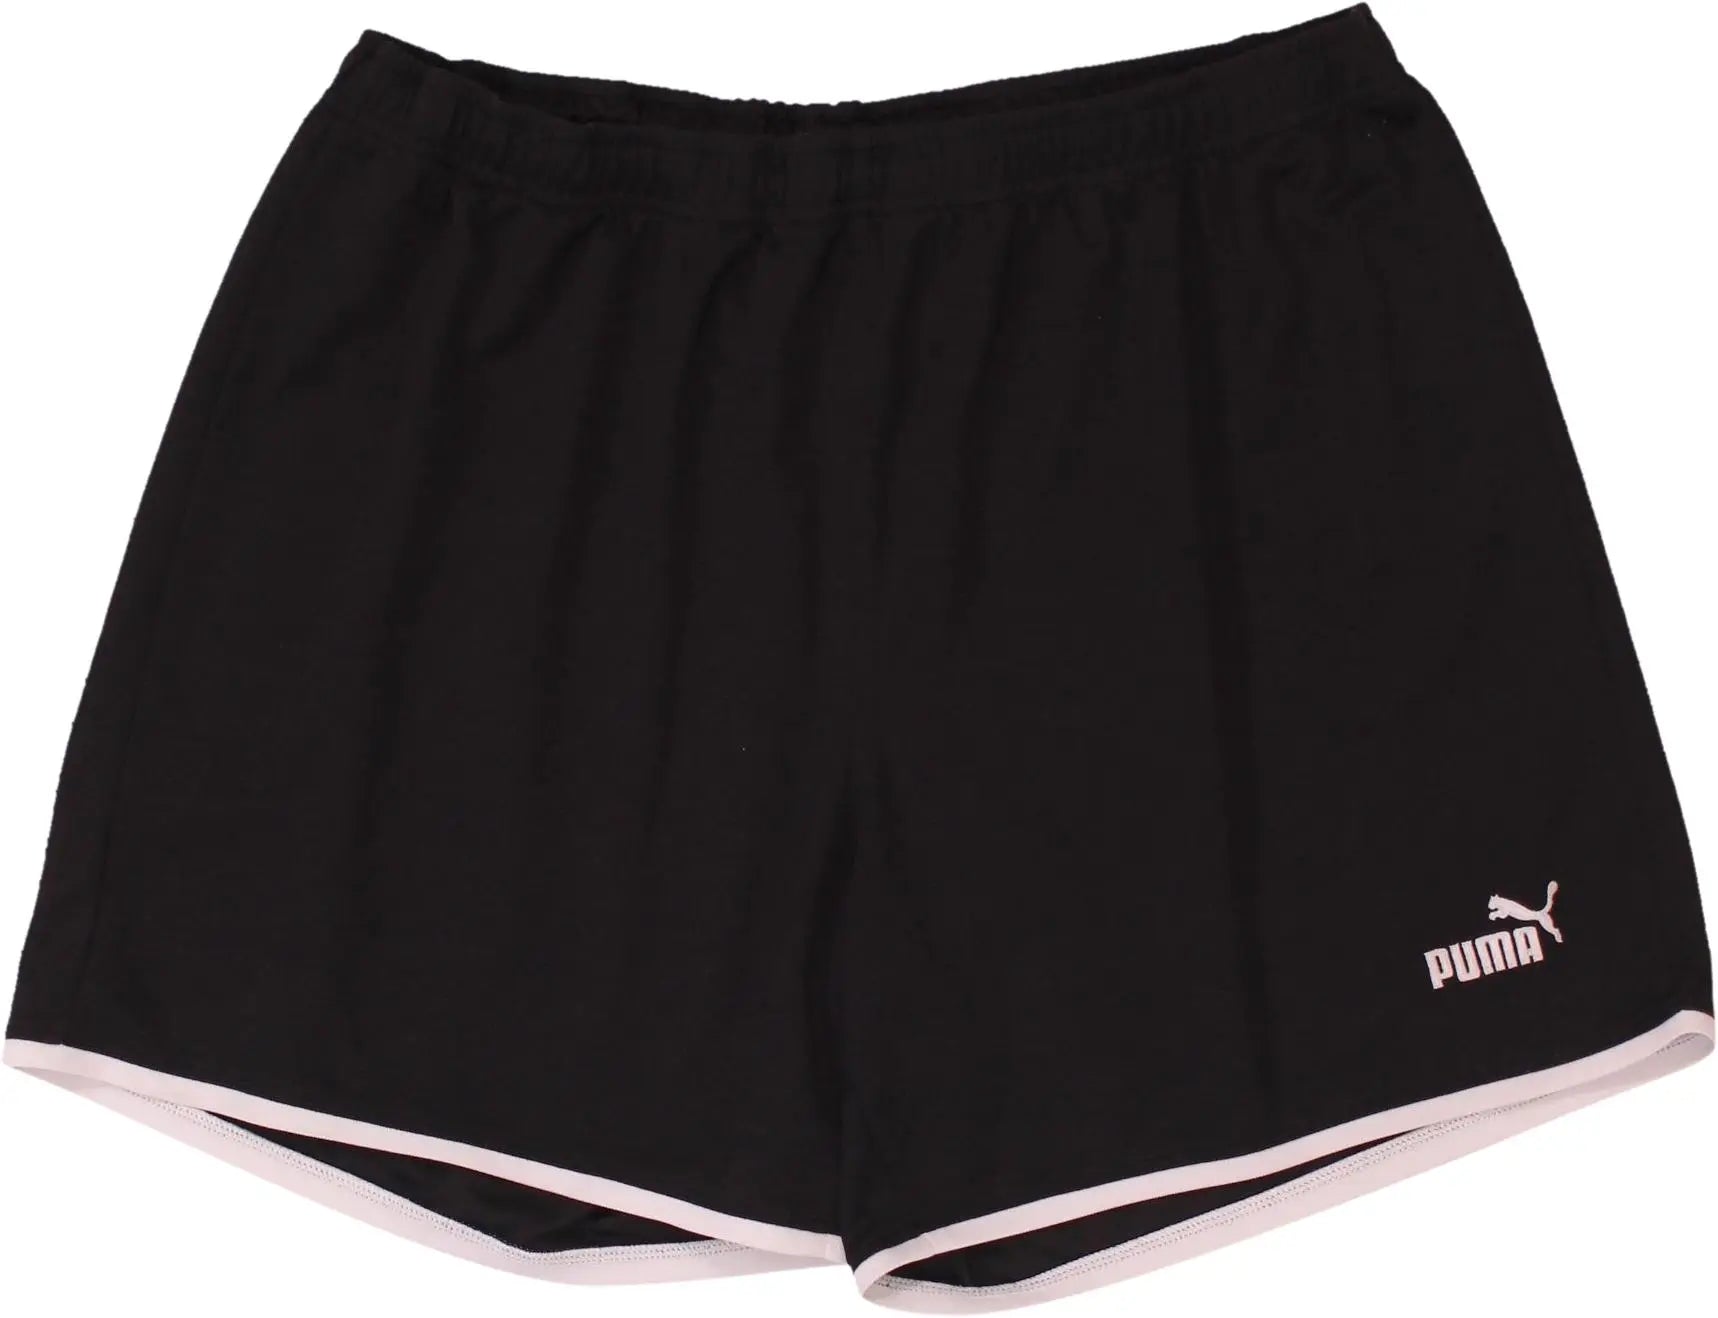 Puma - Puma Training Shorts- ThriftTale.com - Vintage and second handclothing